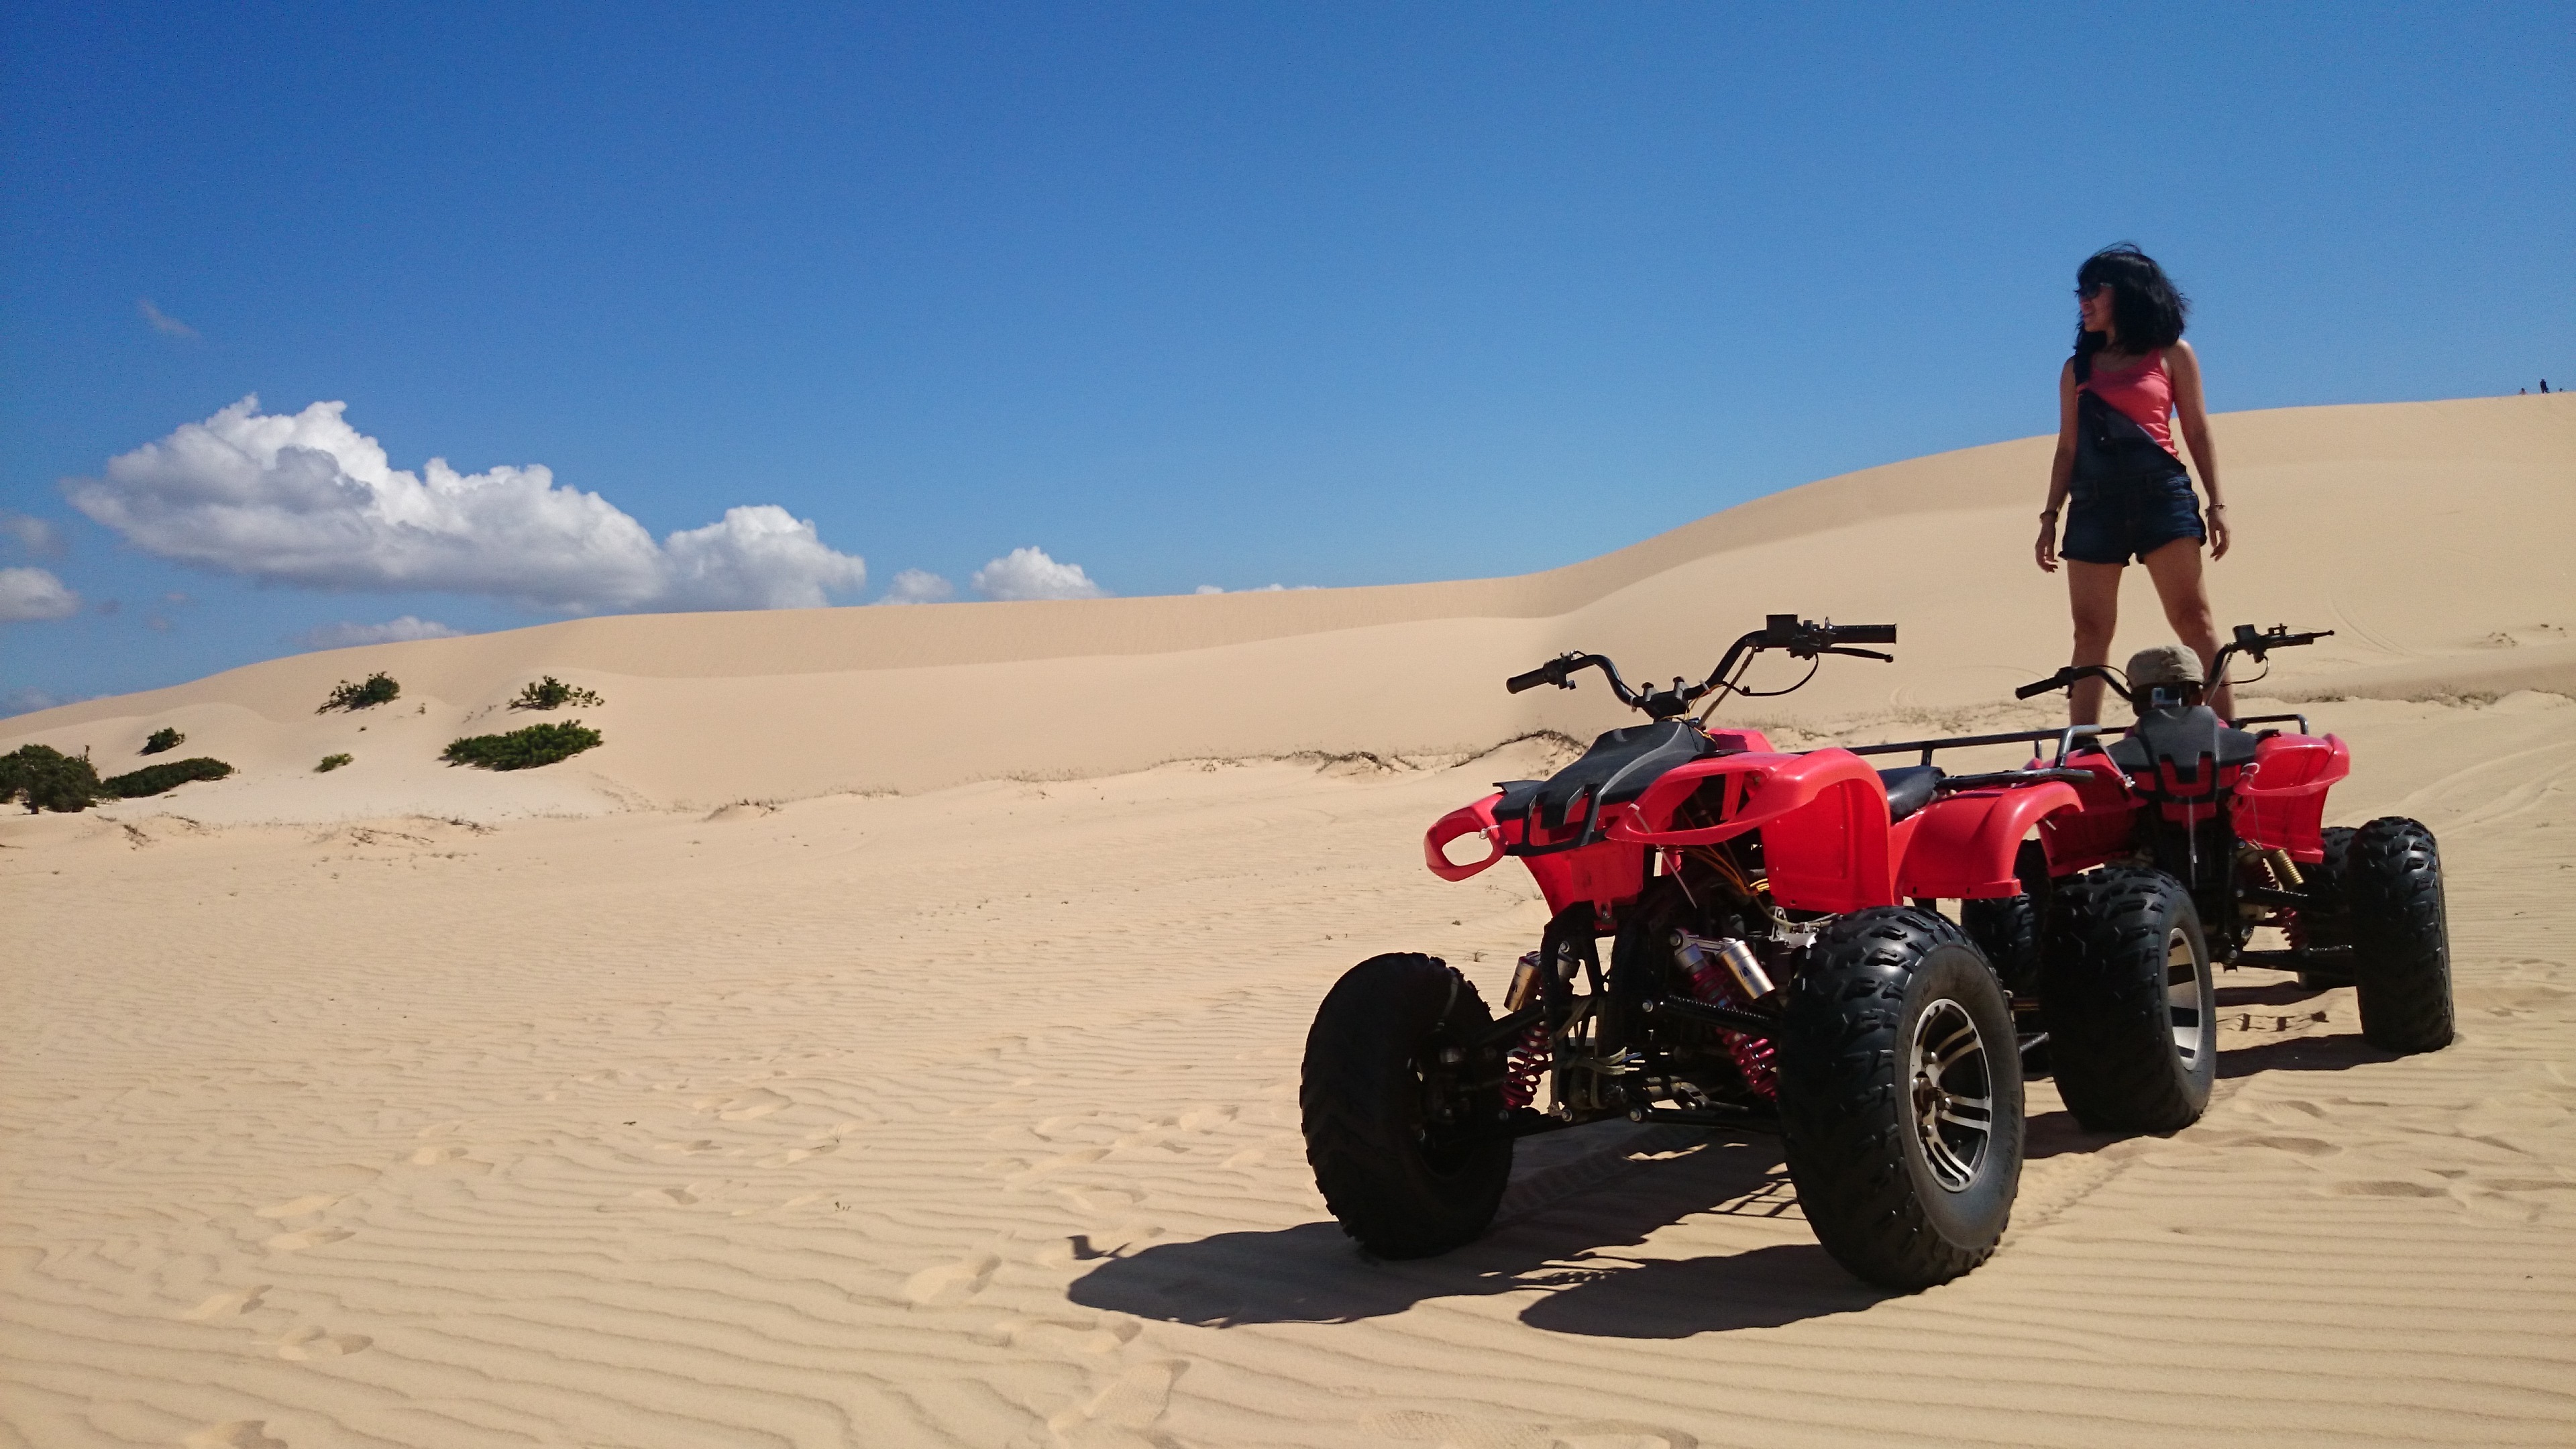 Great adventure in Mui Ne sand dunes